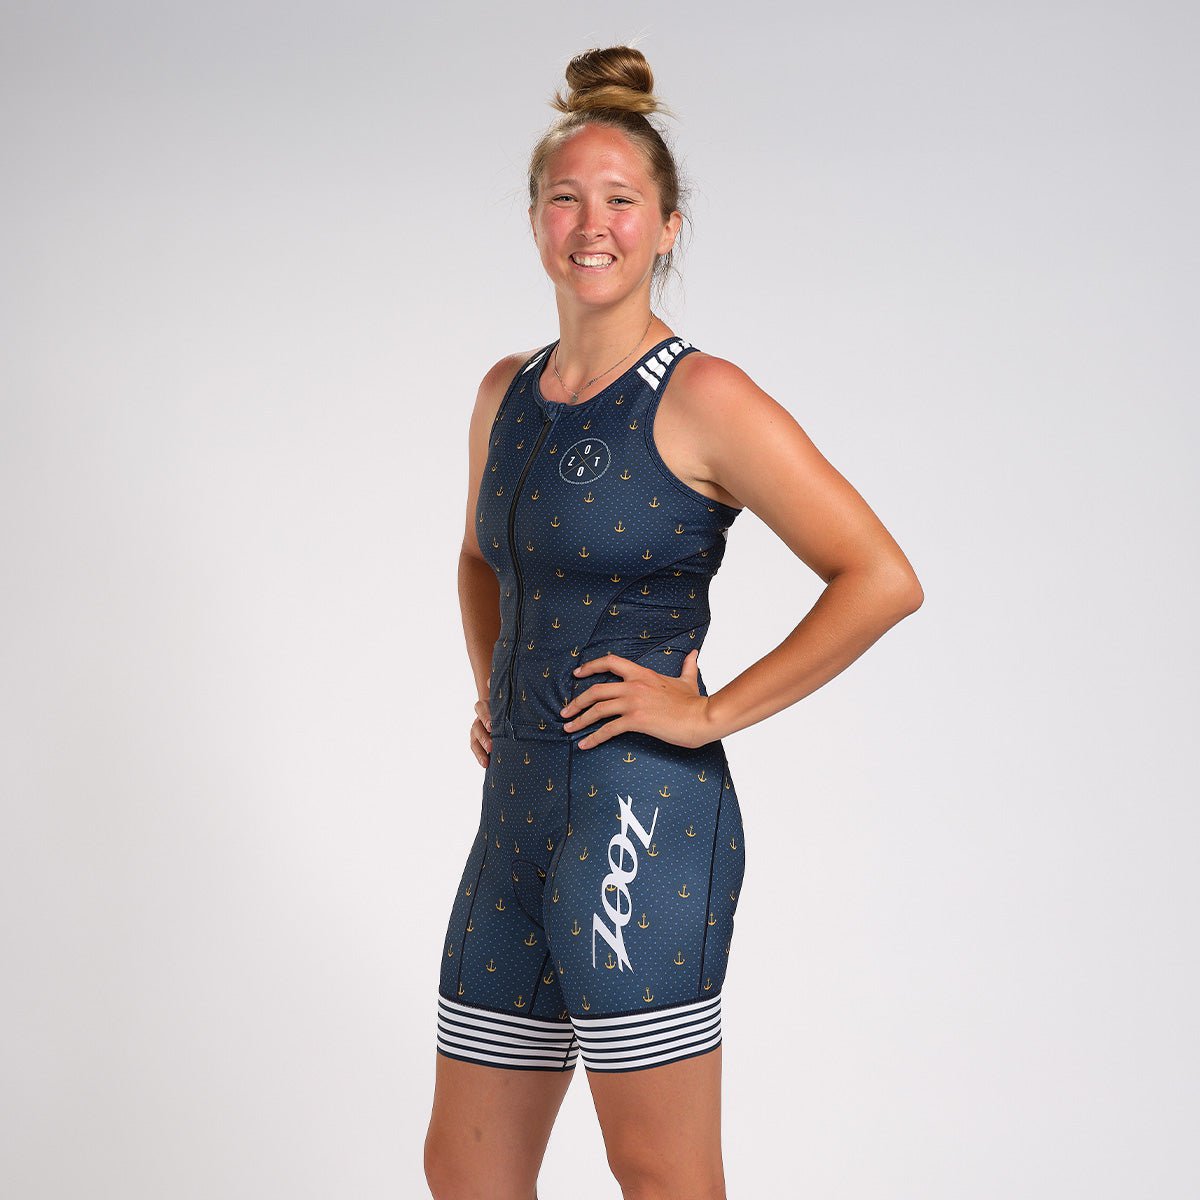 Zoot Sports Triathlon Racesuits Womens LTD Triathlon Sleeveless Full-Zip Racesuit - Anchors Away